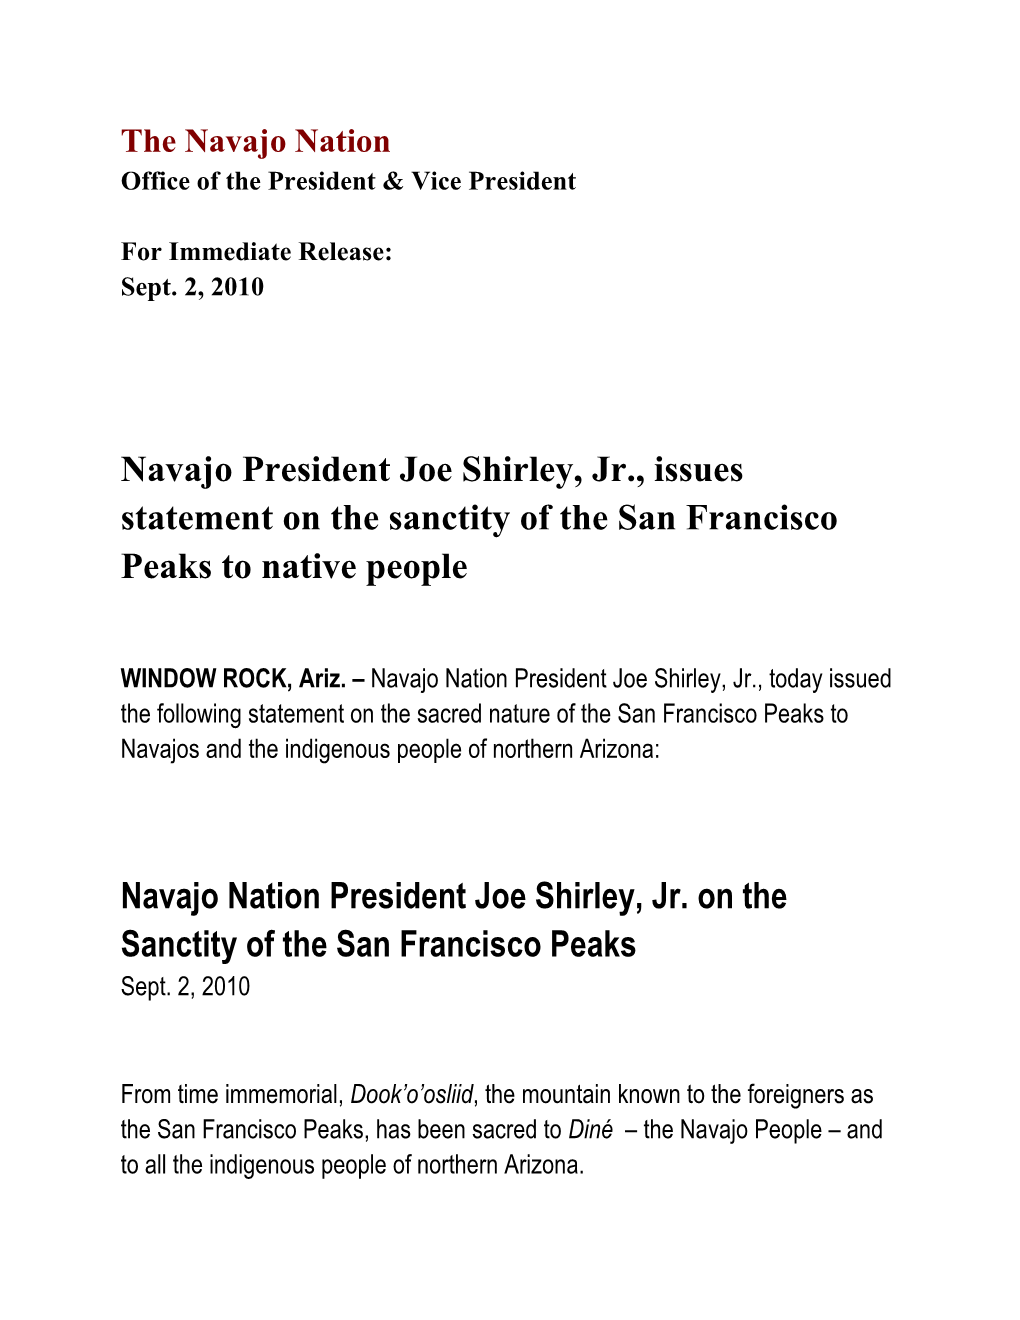 President Shirley Statement on Sanctity of San Francisco Peaks